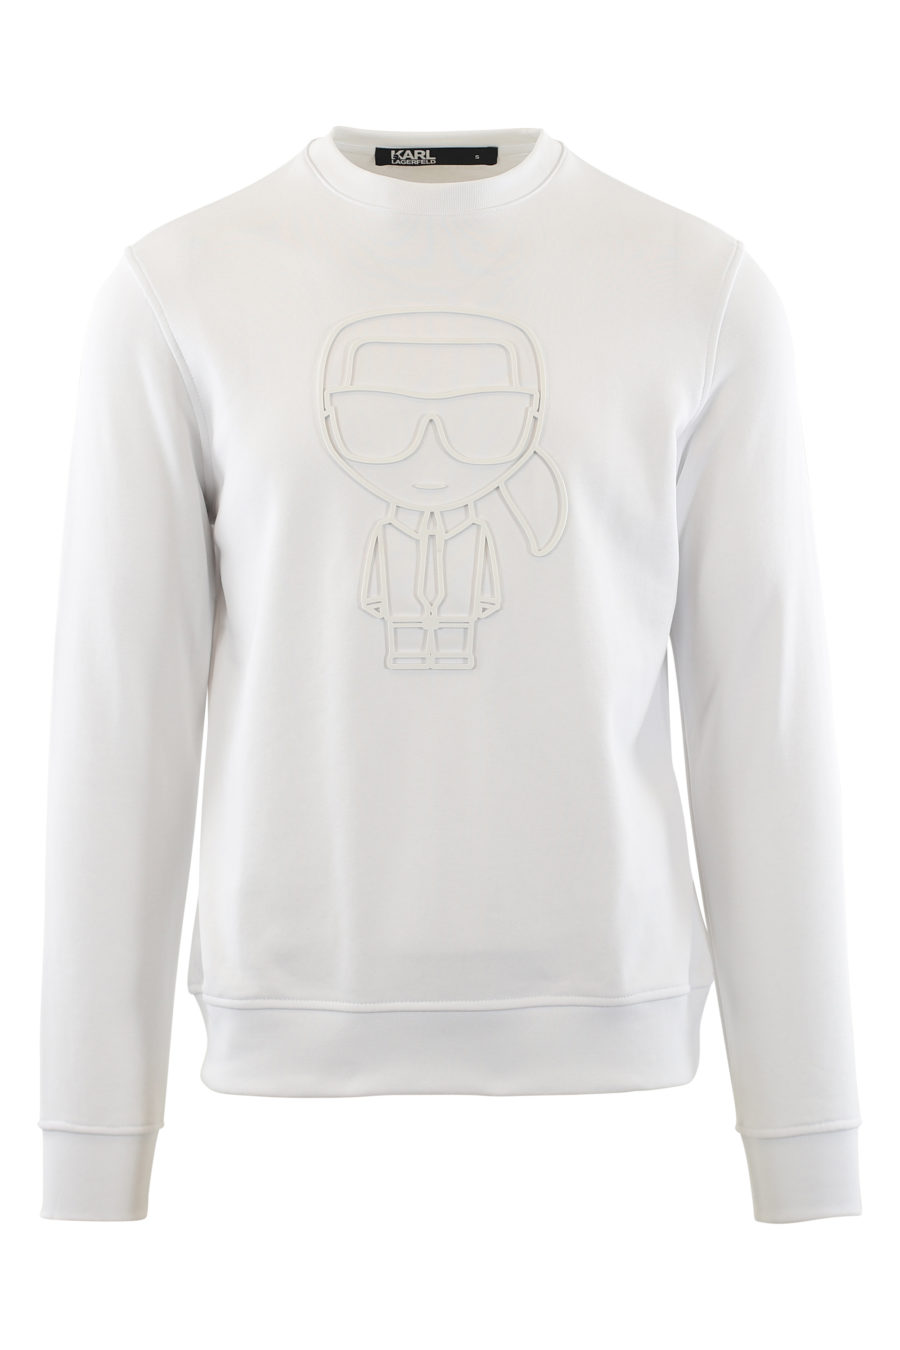 White sweatshirt with white rubber logo - IMG 6532